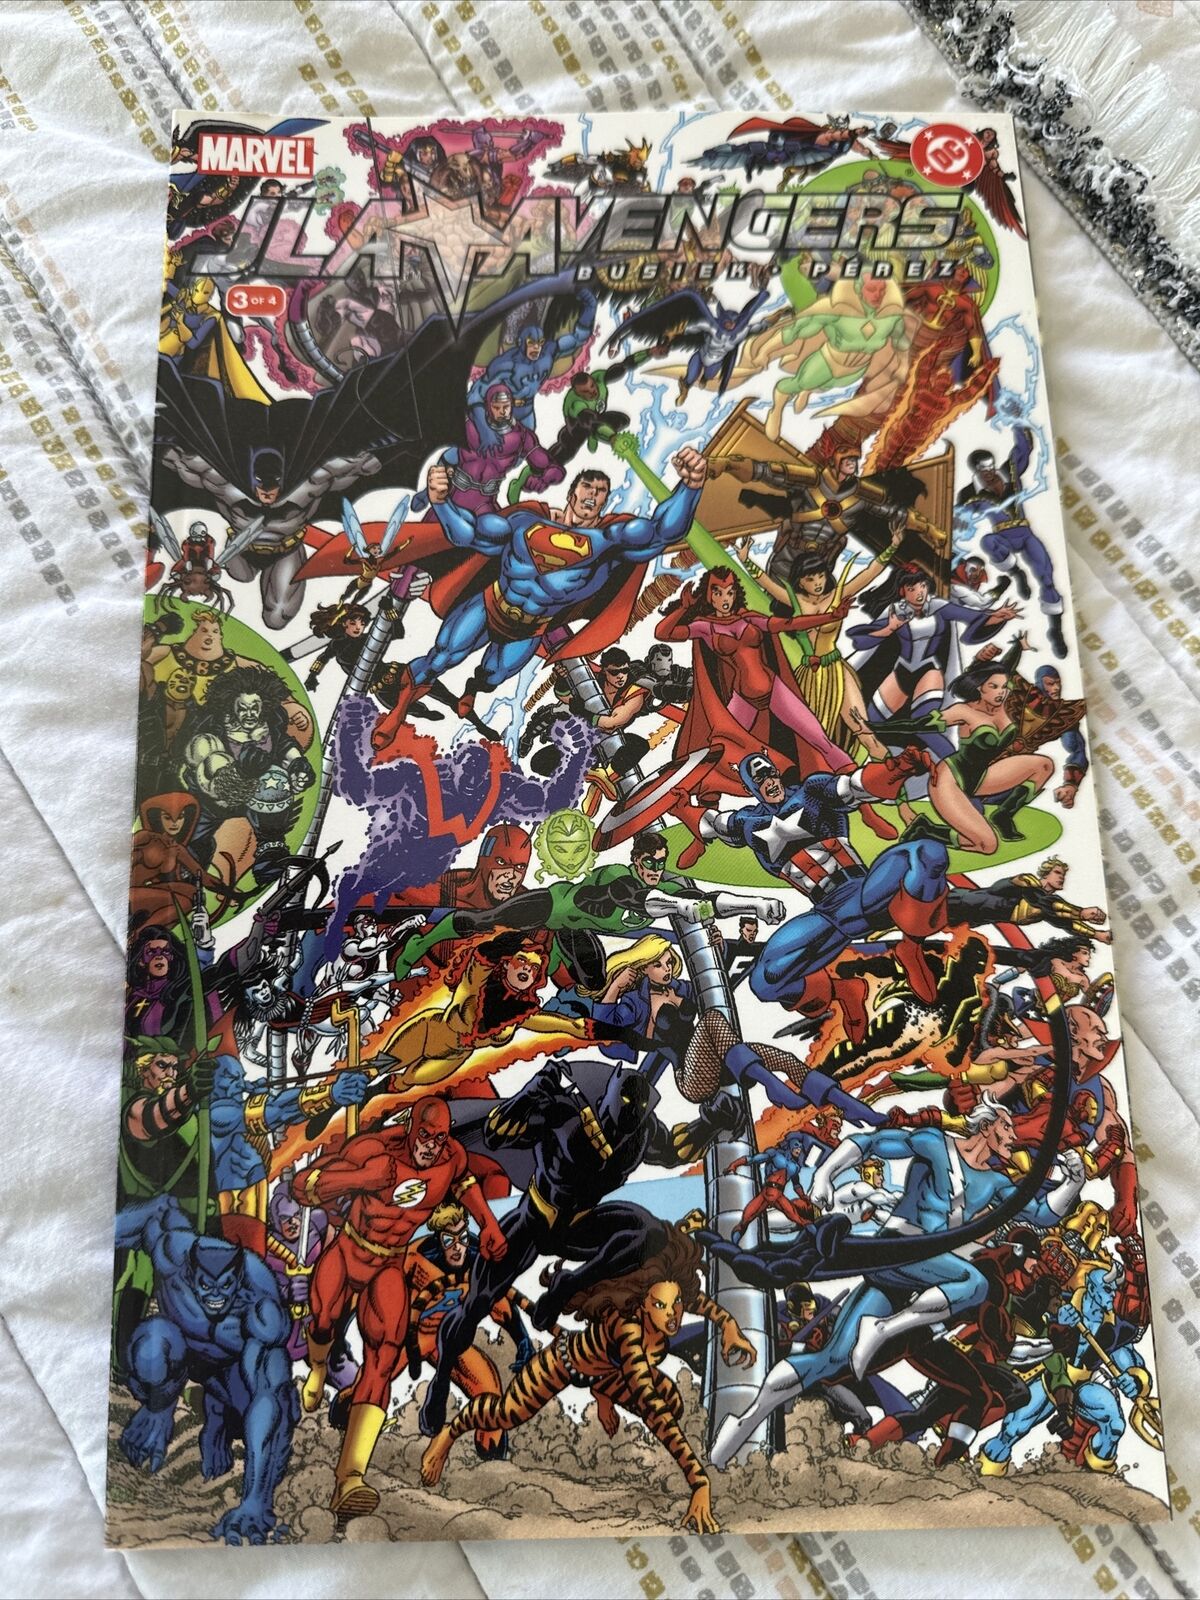 Jla / The Avengers #3 (Marvel Comics December 2003)